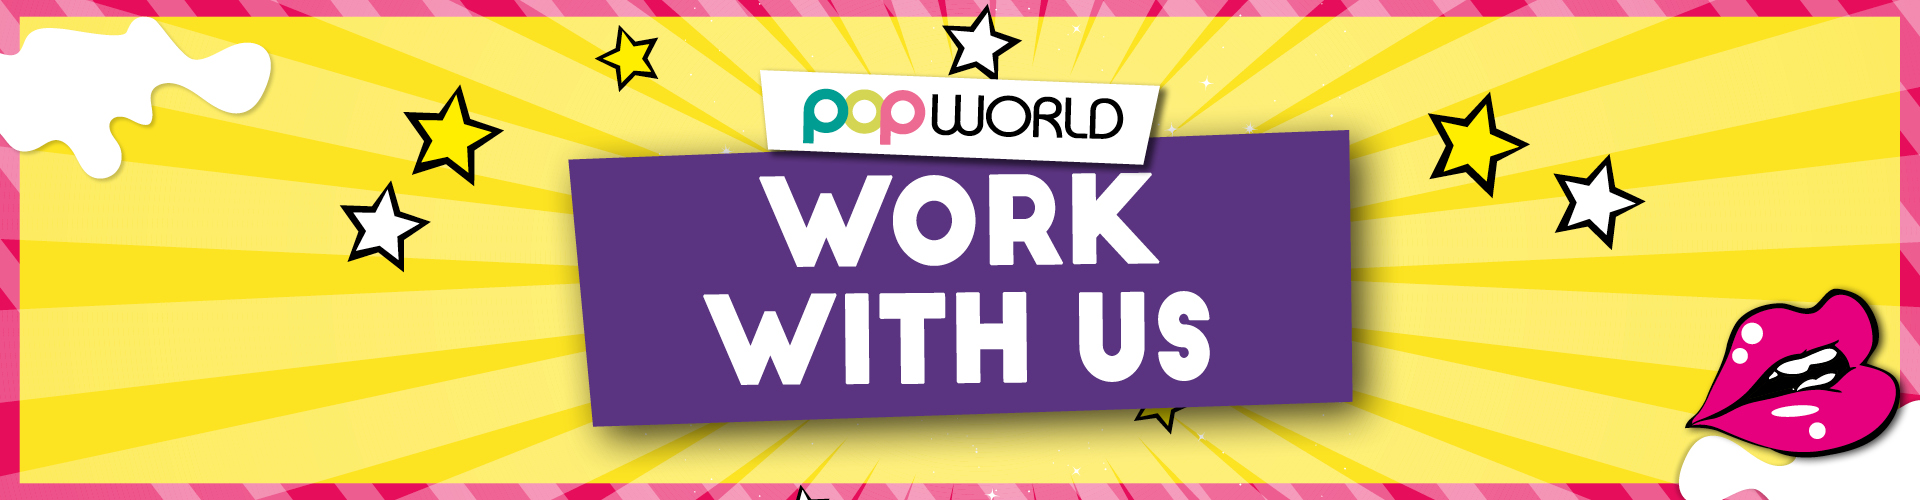 Popworld Work With Us